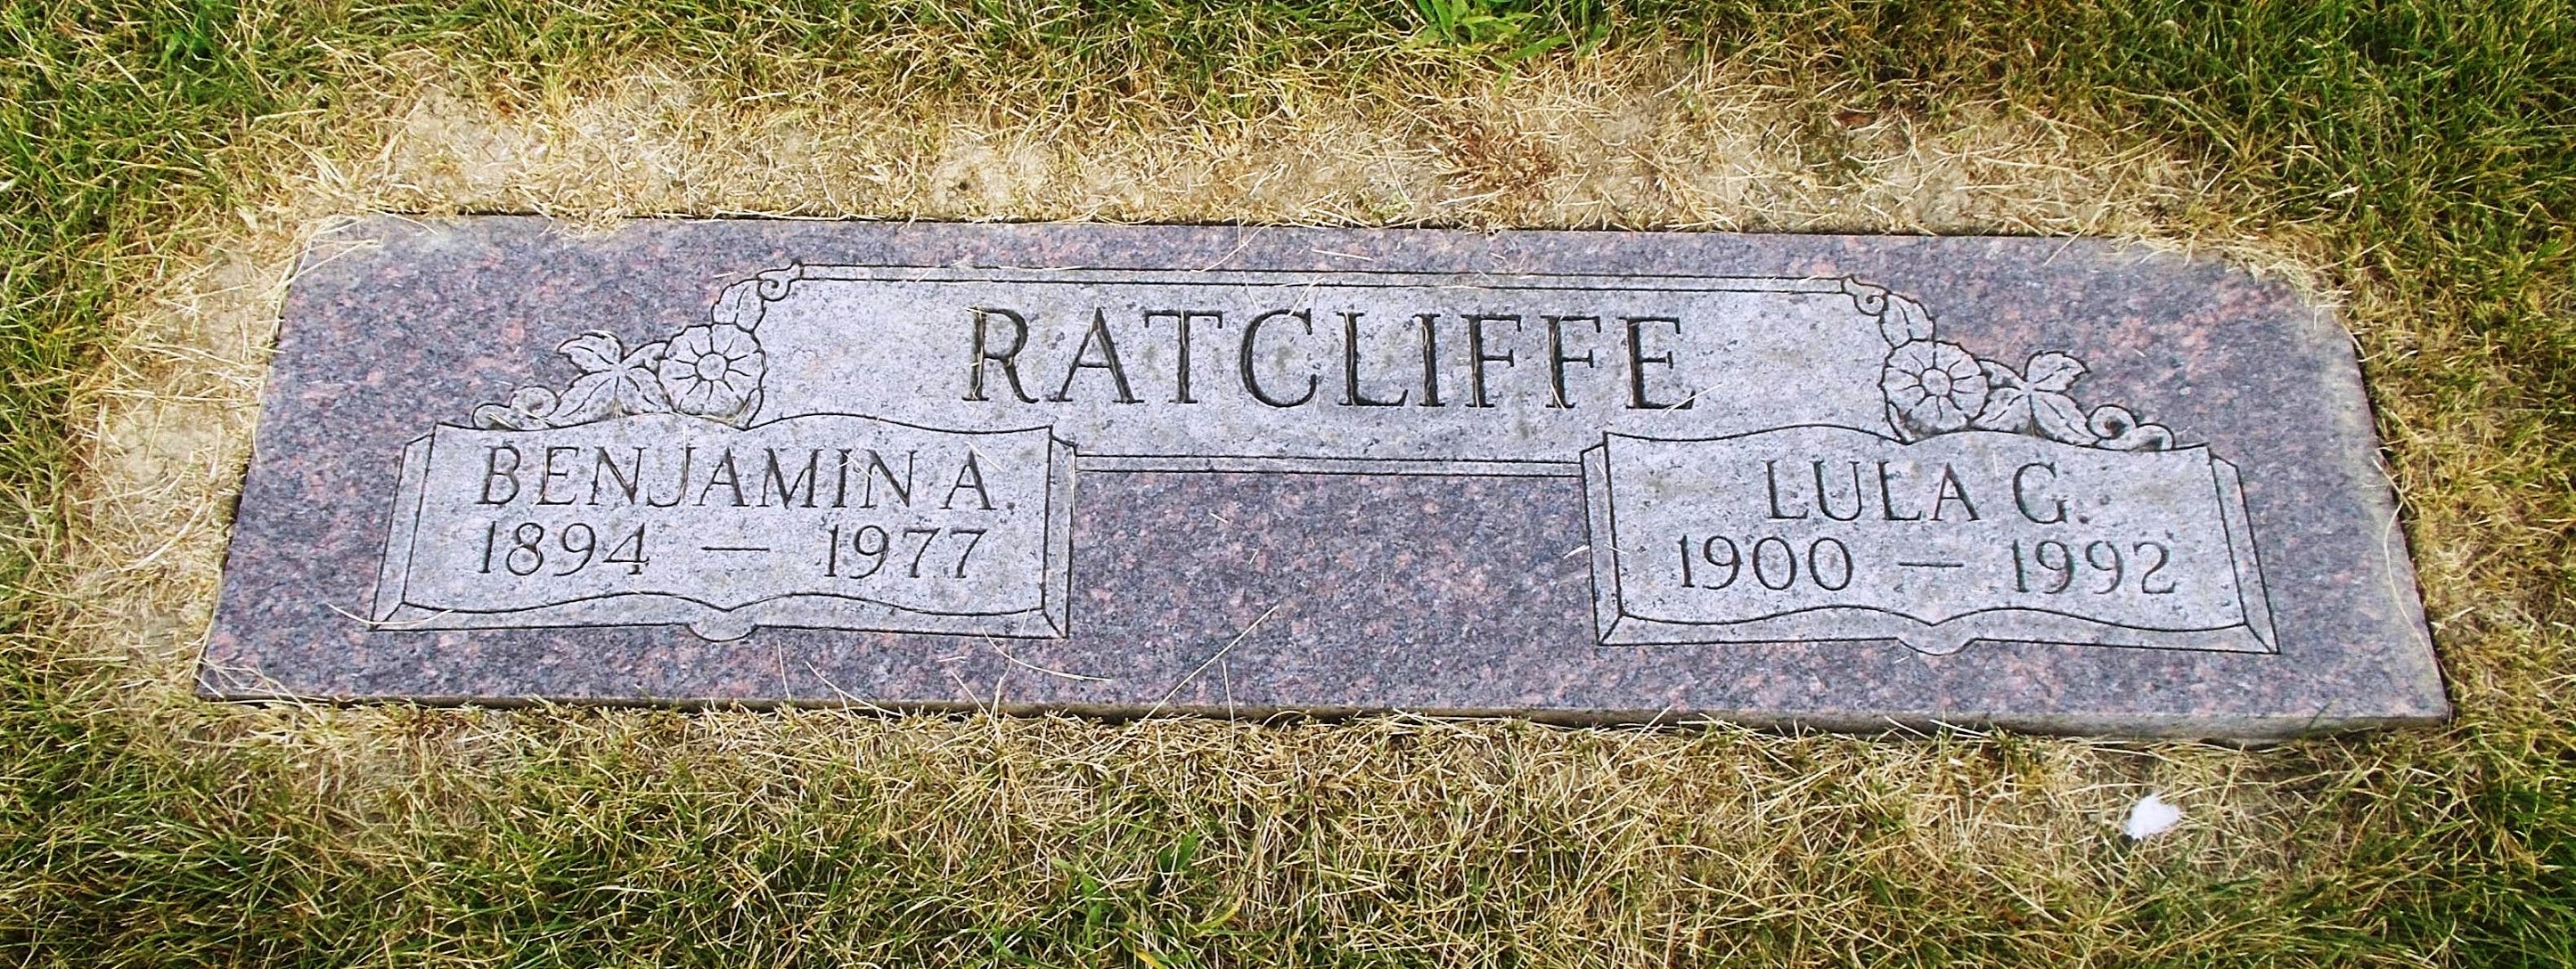 Lula G Ratcliffe